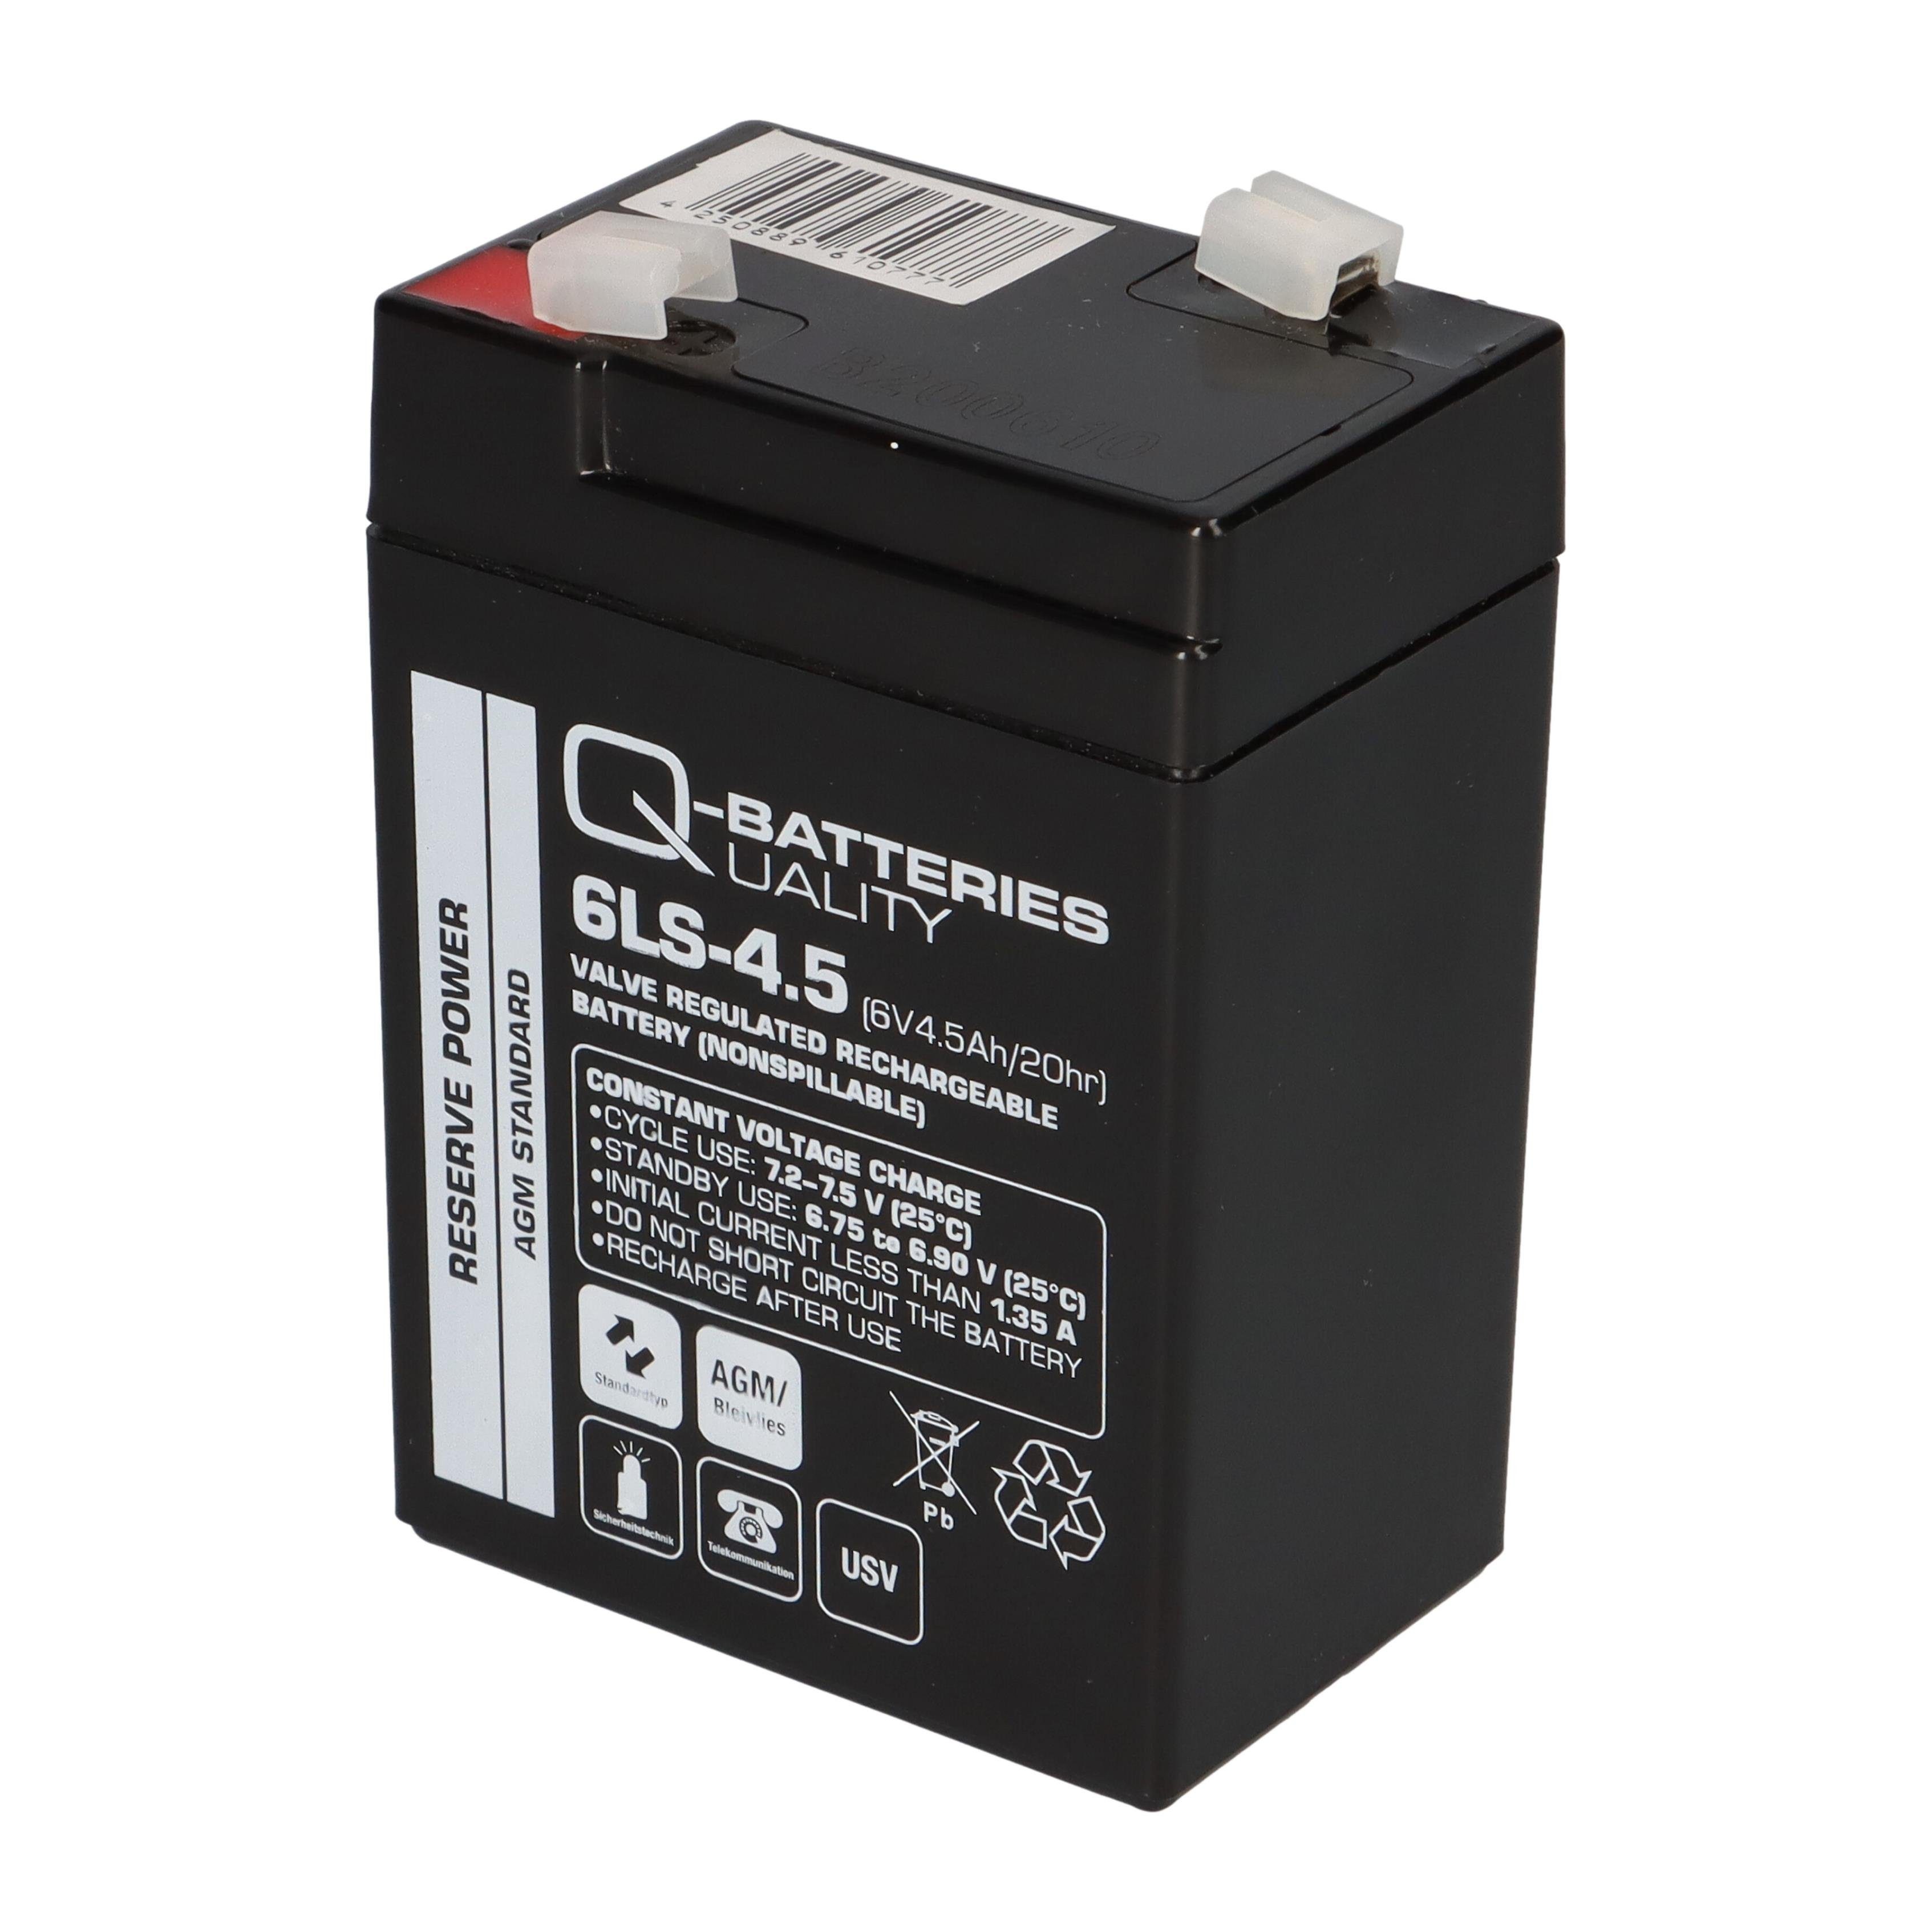 Q-Batteries Set Q-Batteries 6LS-4.5 Blei BL 6-0,6 Bleiakkus 4,5Ah + 6V Ladegerät Akku Blei-V